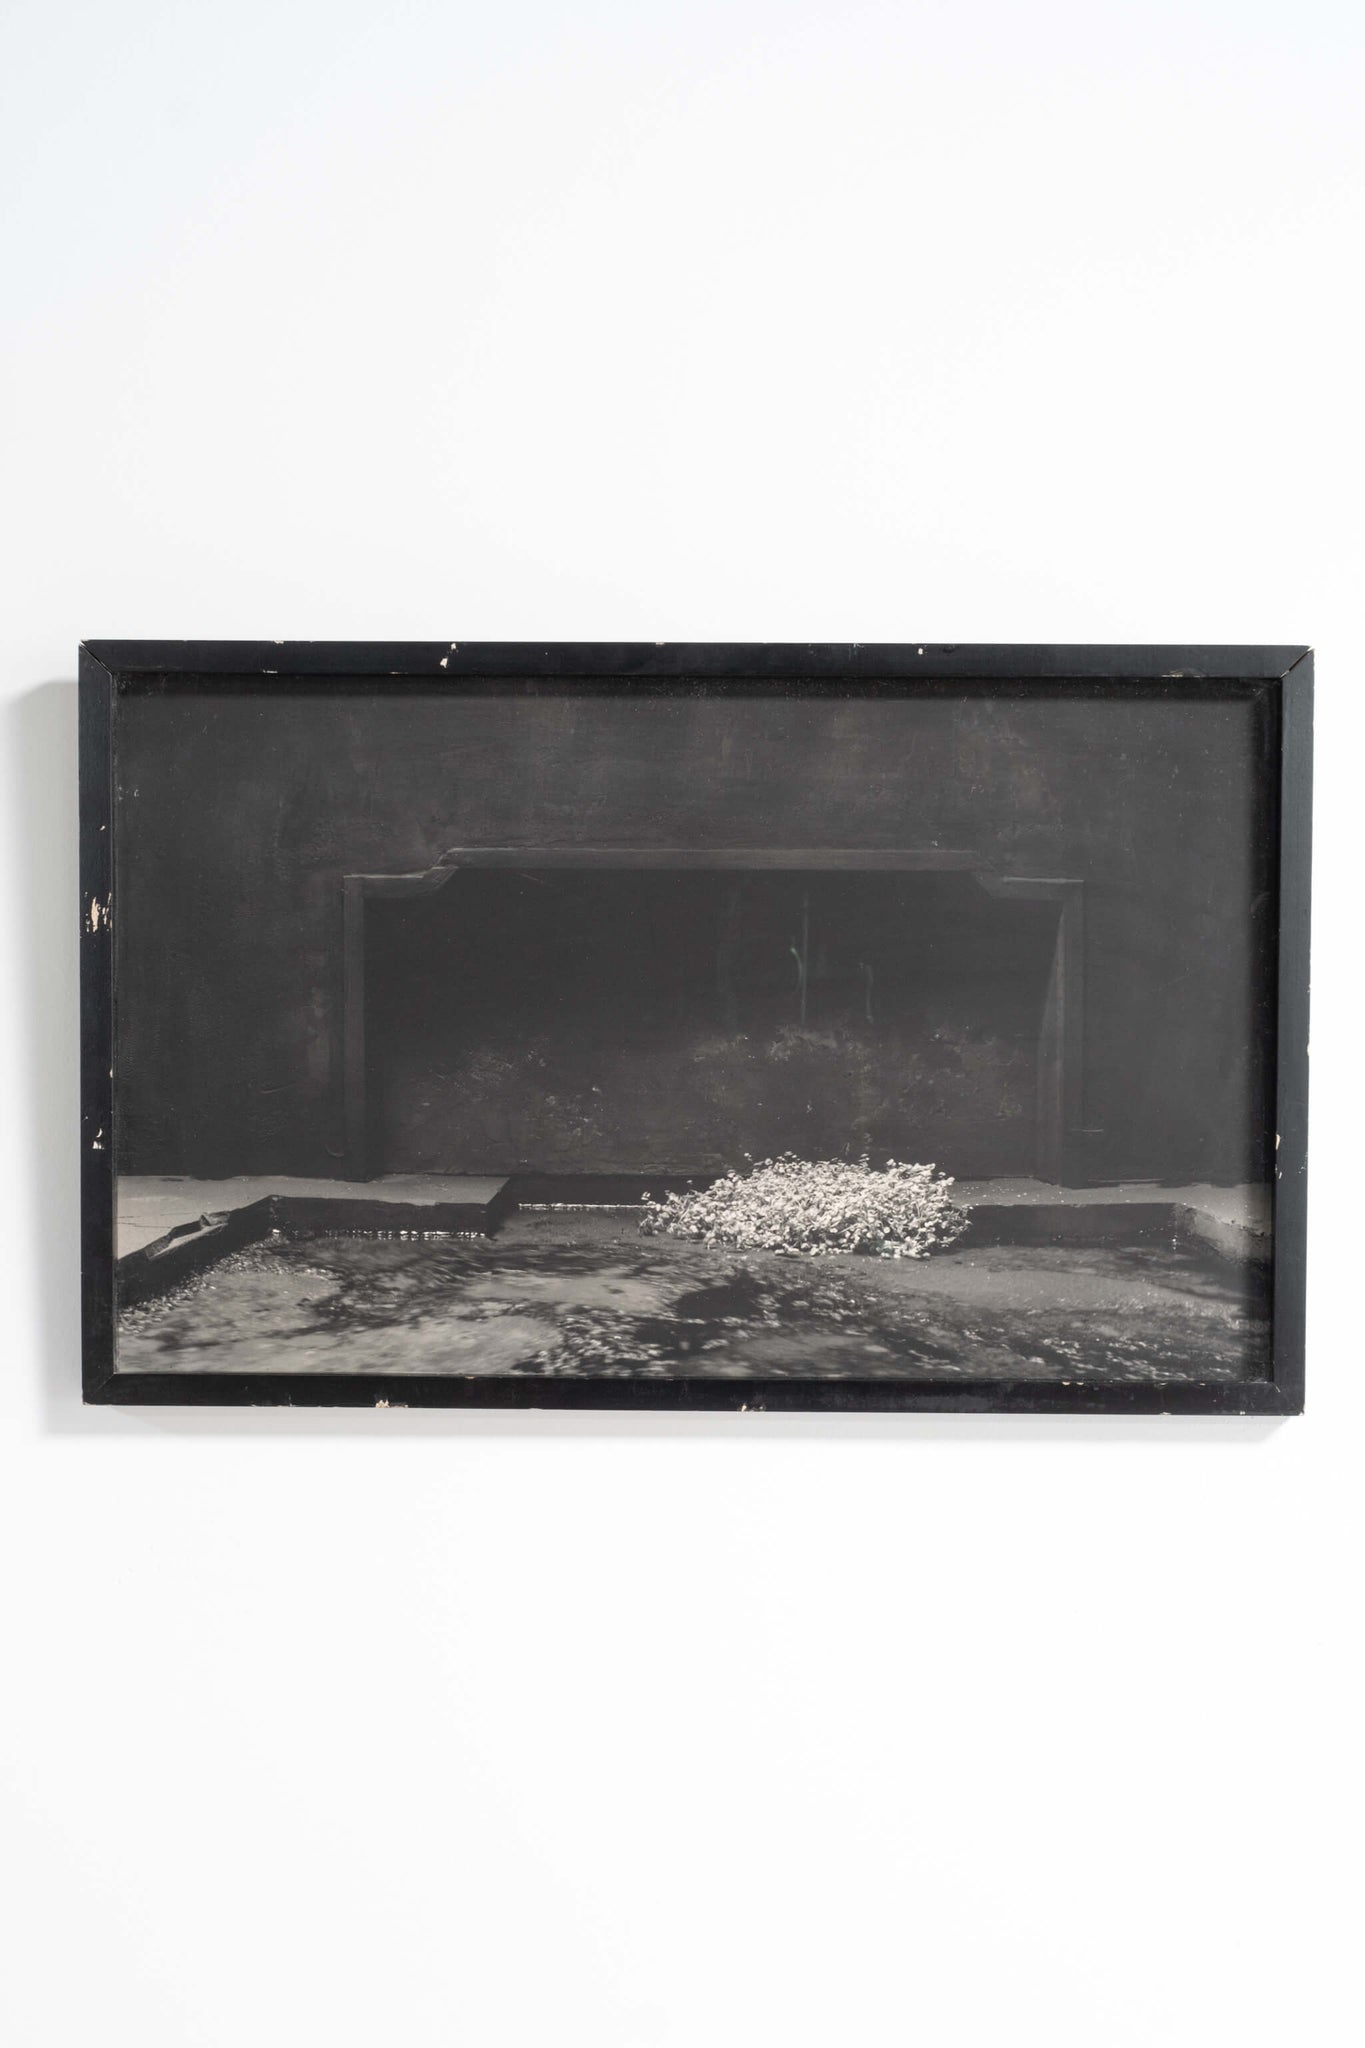 Black and White Photograph, framed